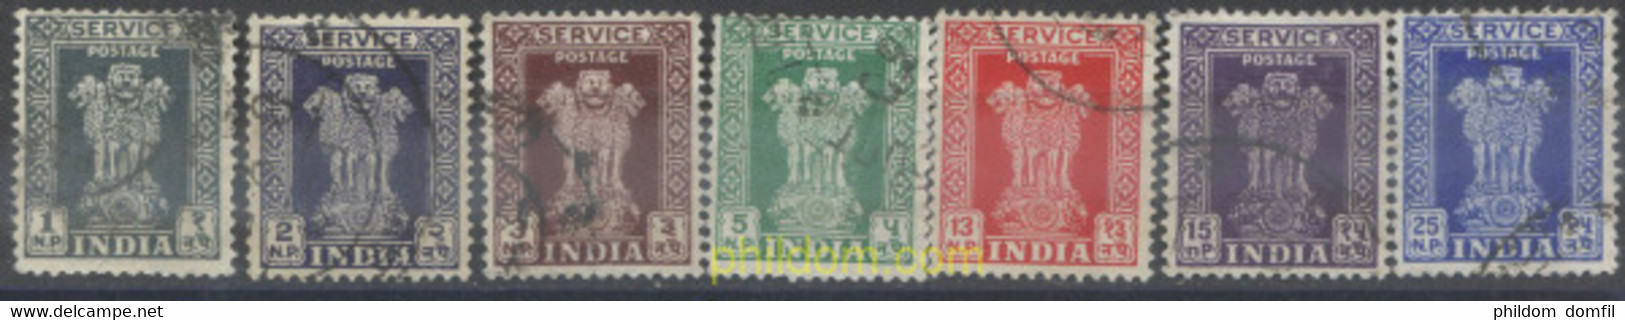 662103 USED INDIA 1957 COLUMNA DE ASOKA - Unused Stamps